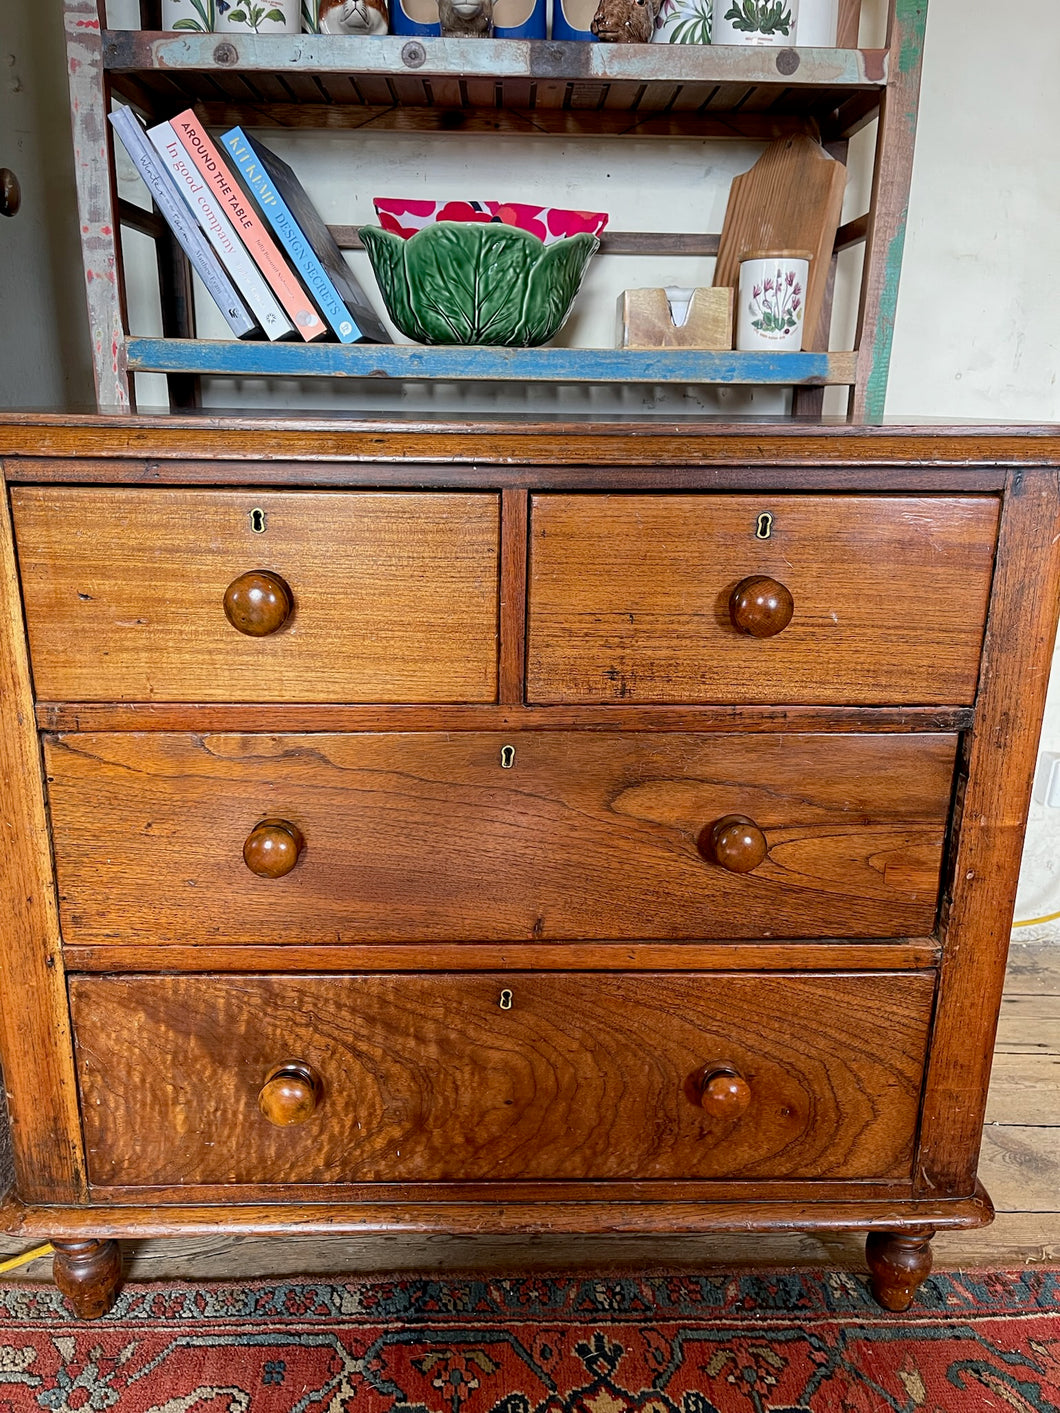 Cedar chest of drawers